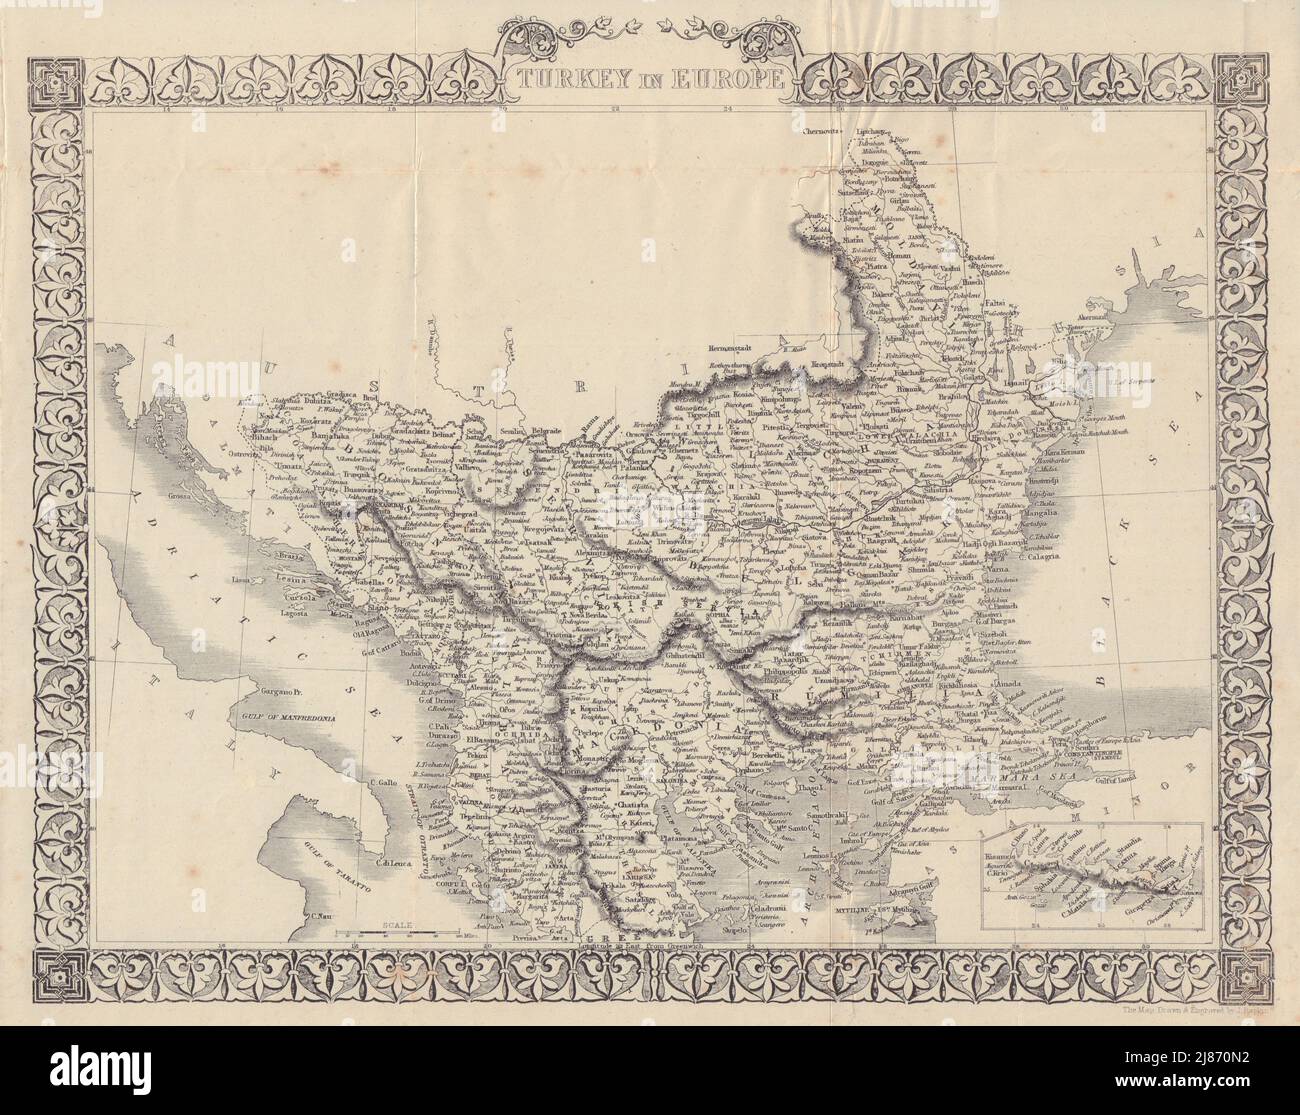 Türkei in Europa. Balkan. Seltene Auflage ohne Vignetten. Karte VON TALLIS/RAPKIN 1855 Stockfoto